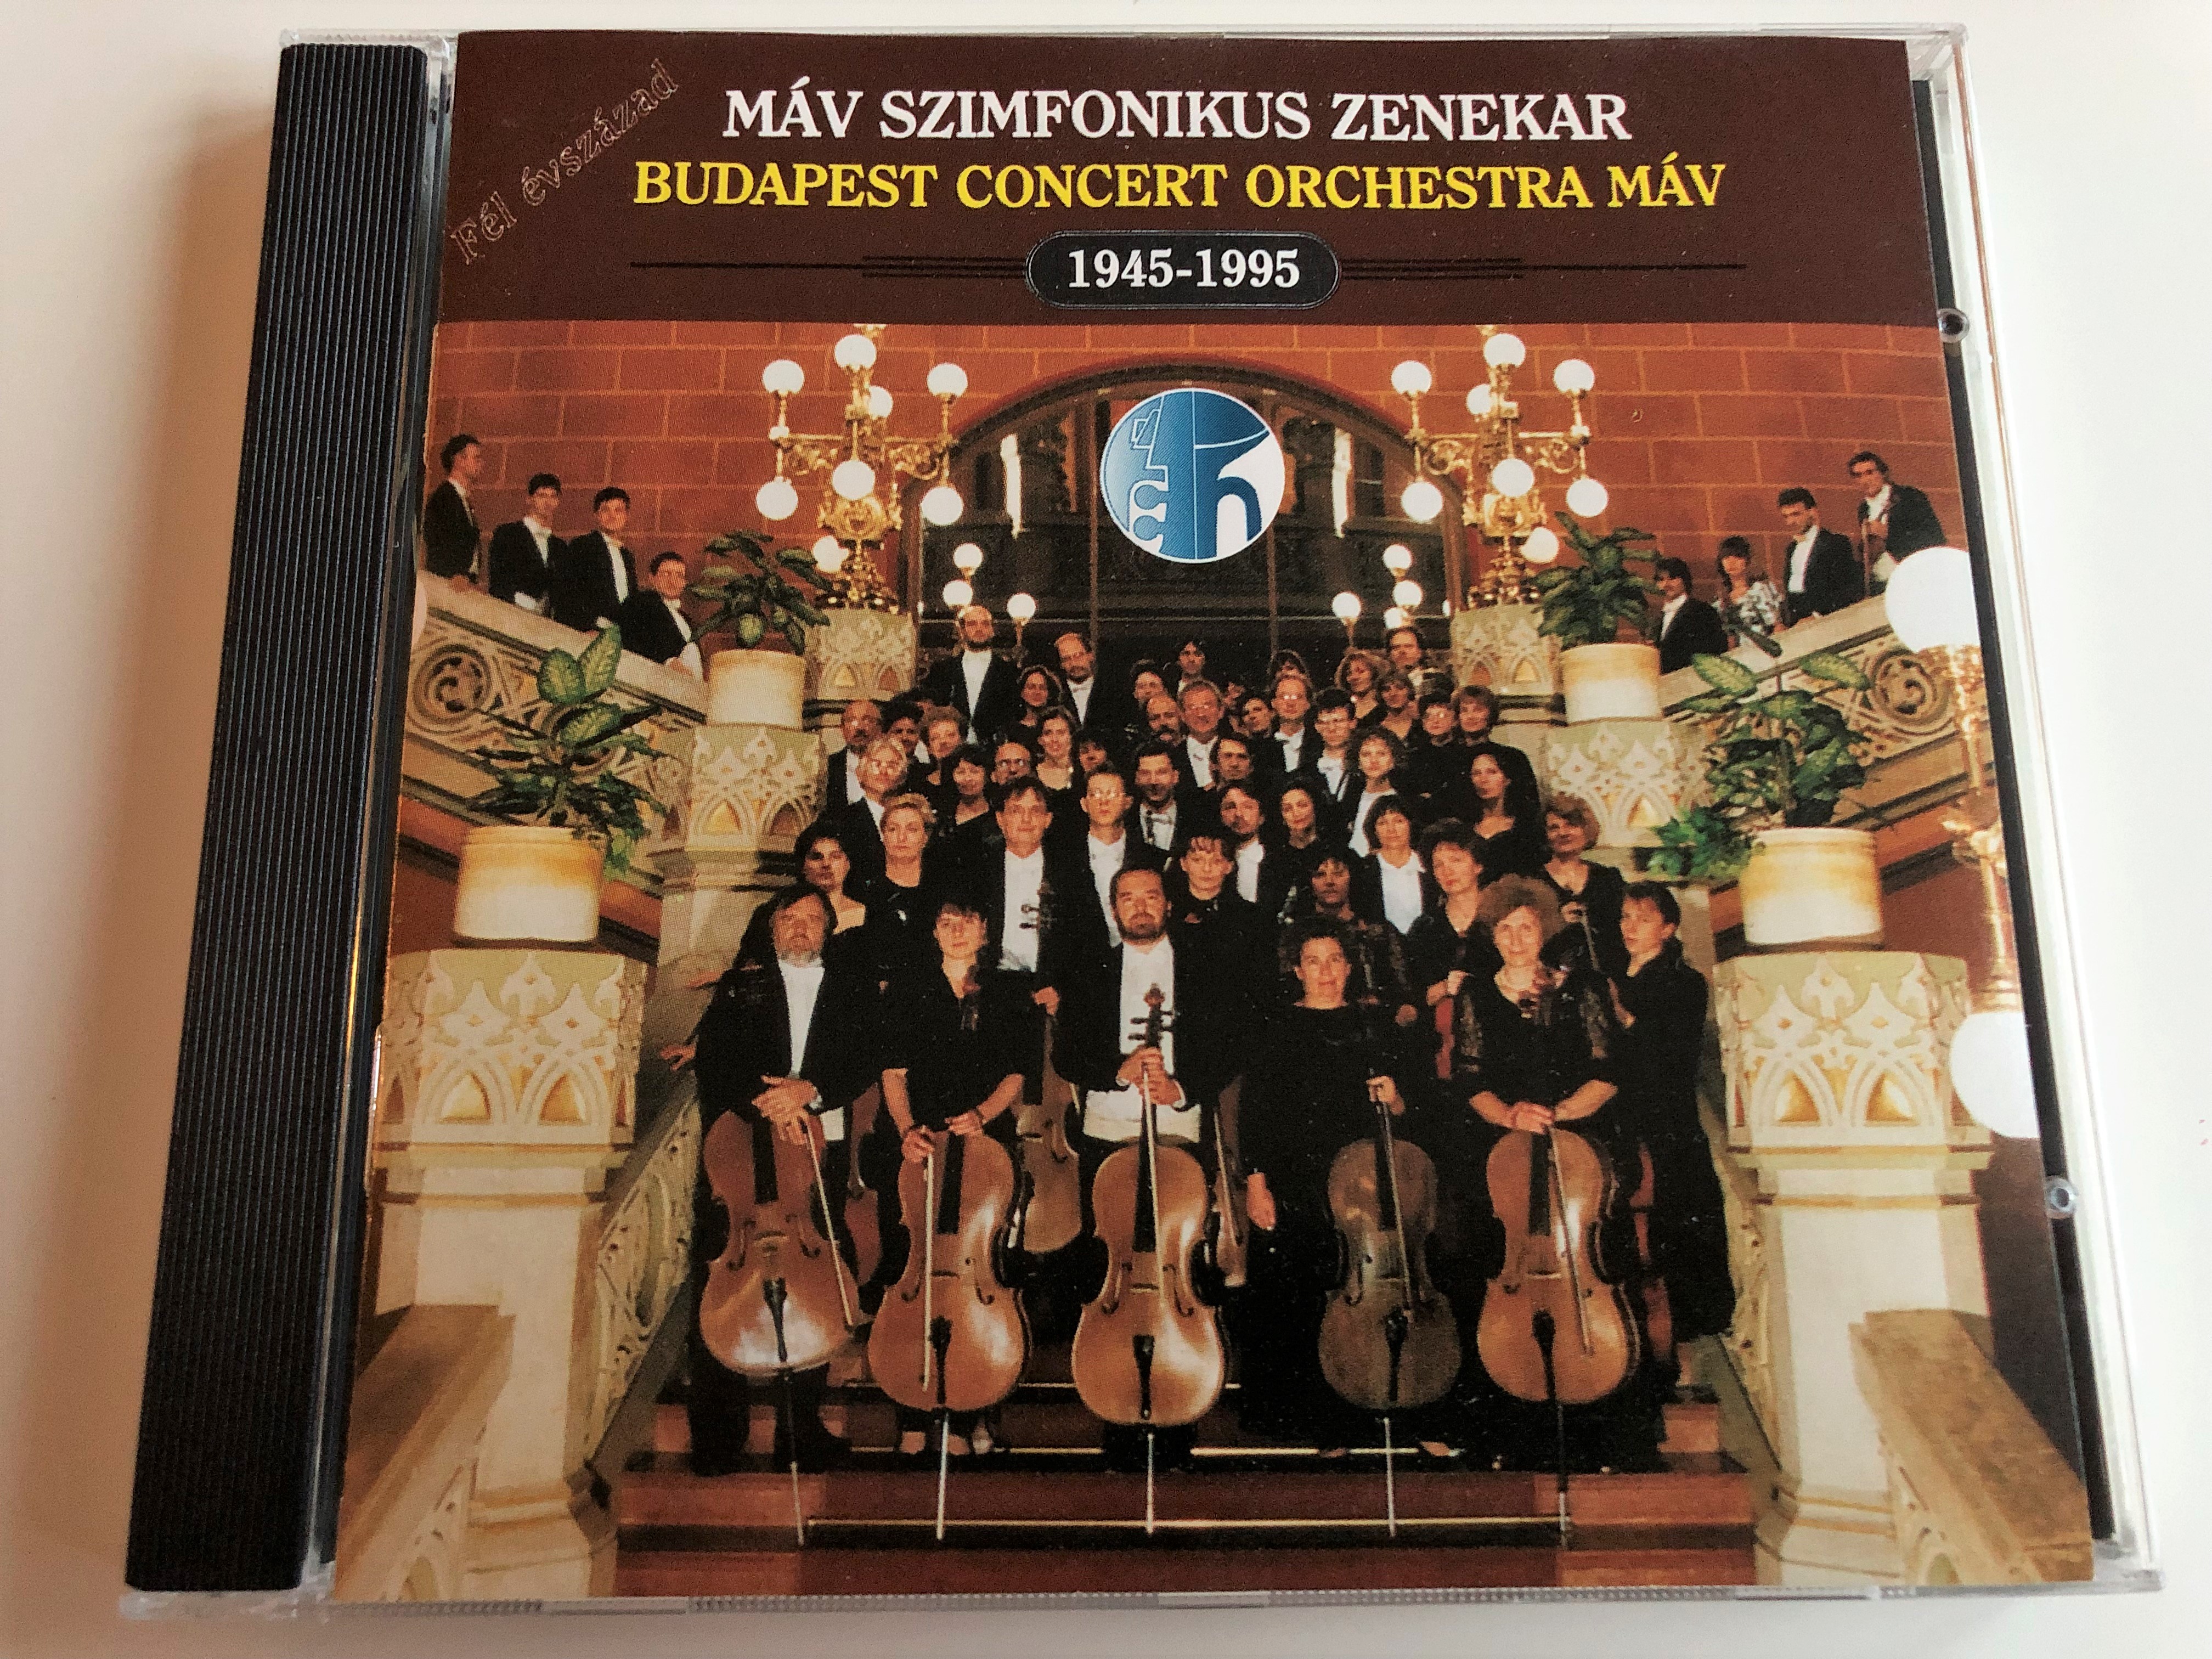 budapest-concert-orchestra-m-v-m-v-szimfonikus-zenekar-50-year-anniversary-1945-1995-compilation-of-great-classics-brcd-0039-1-.jpg